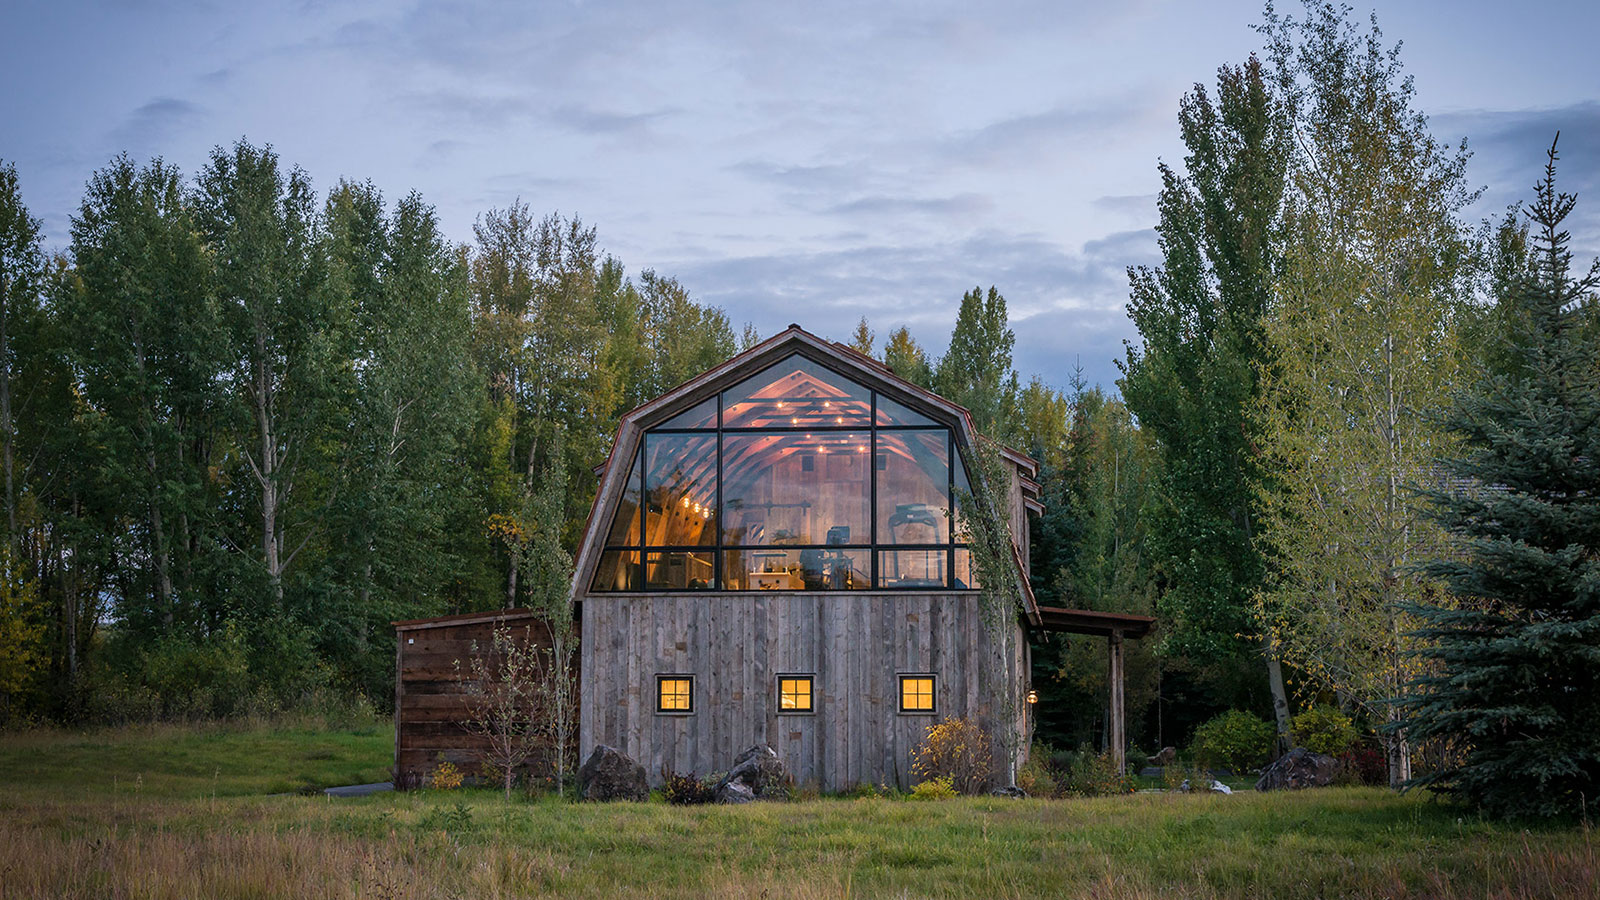 The Barn by Carney Logan Burke Architects